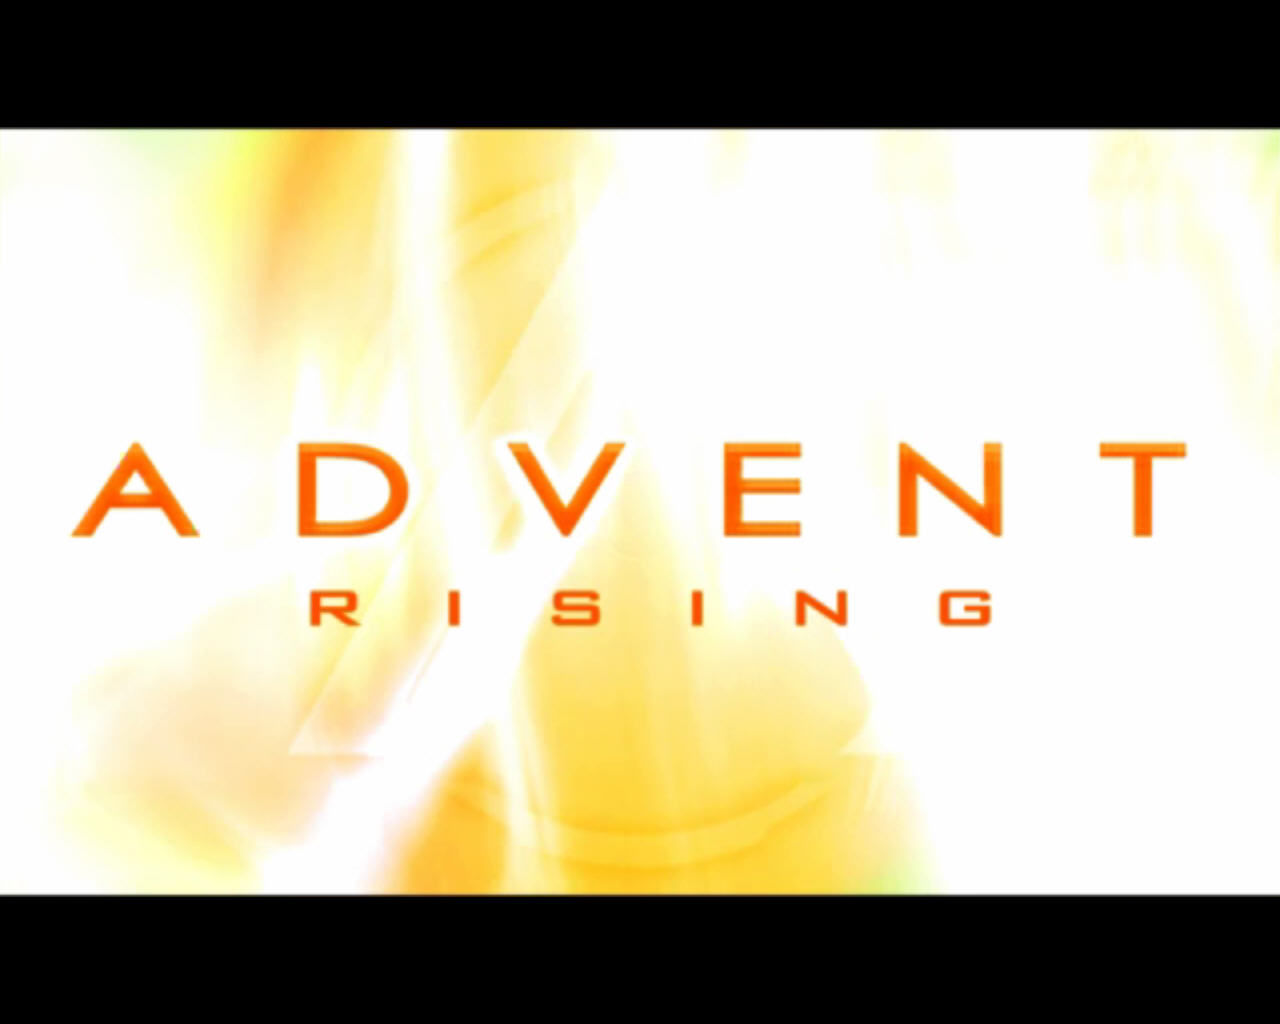 Advent Rising - Microsoft Xbox Game